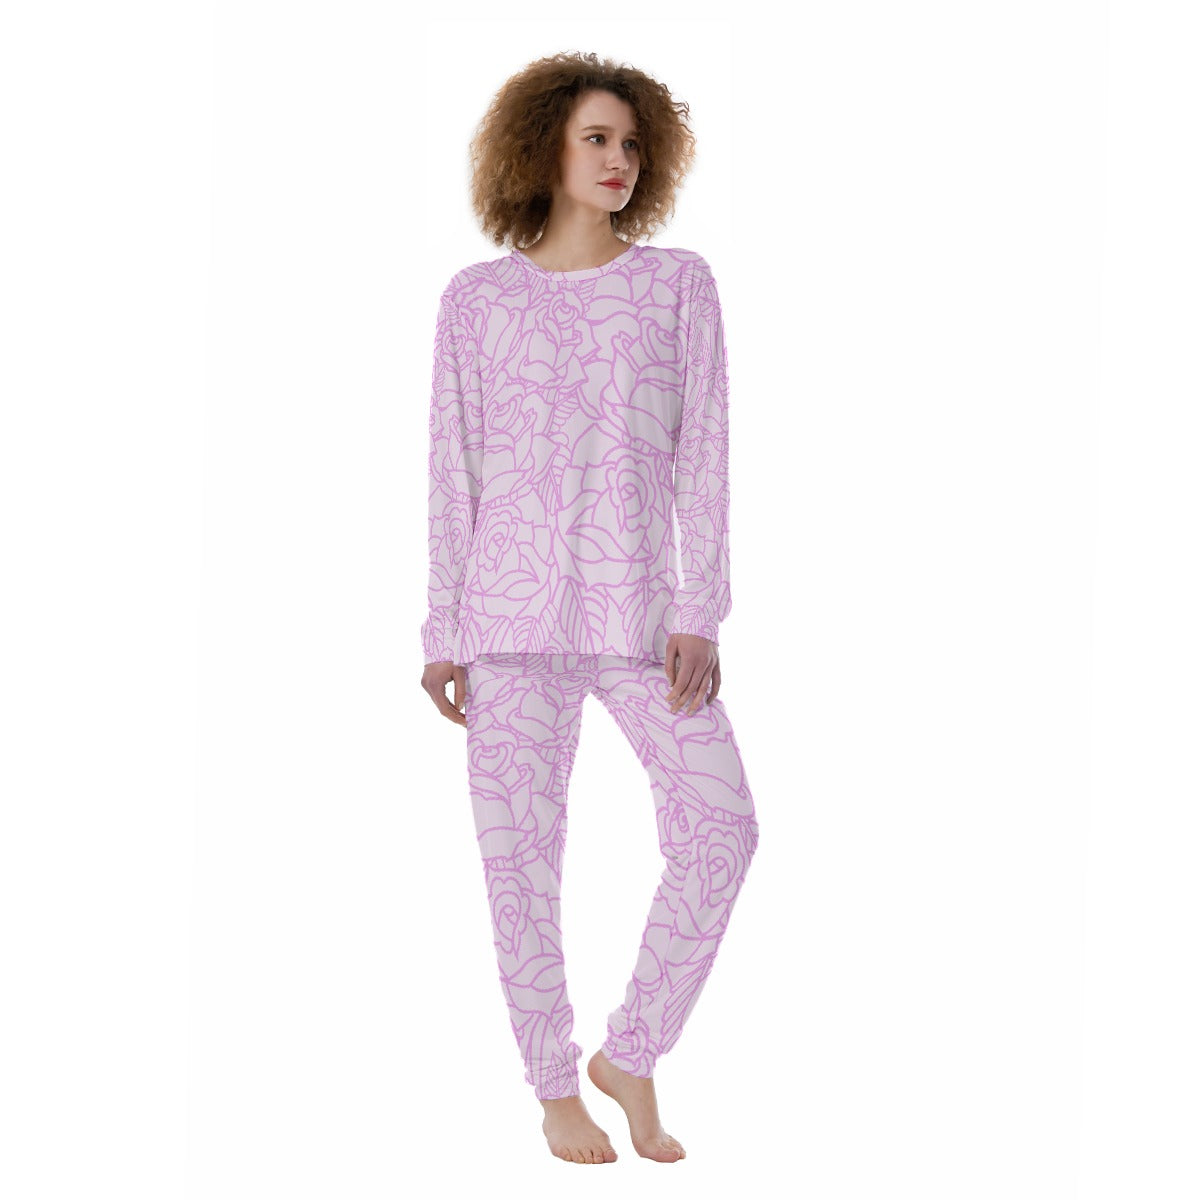 Lavender All-Over Print Women's Pajamas